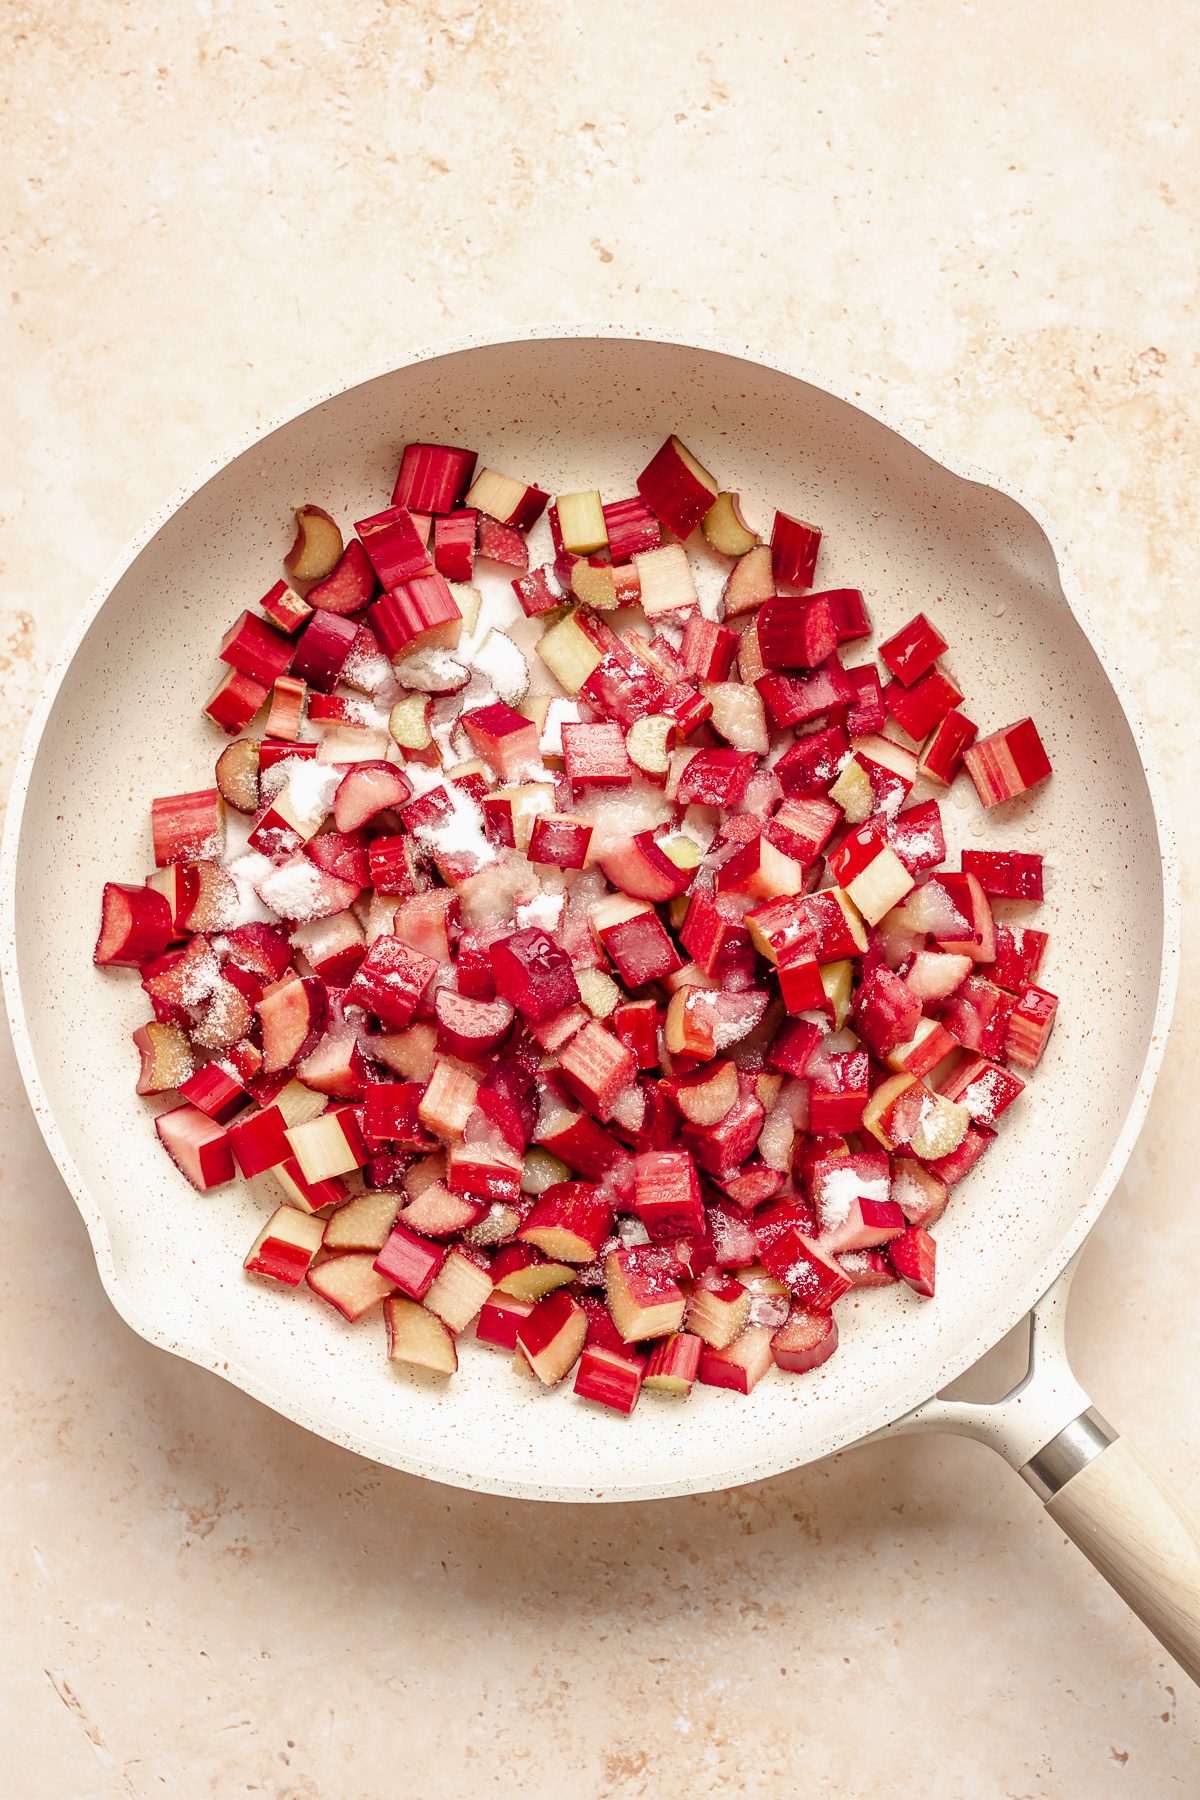 Rhubarb and sugar in a frying pan.